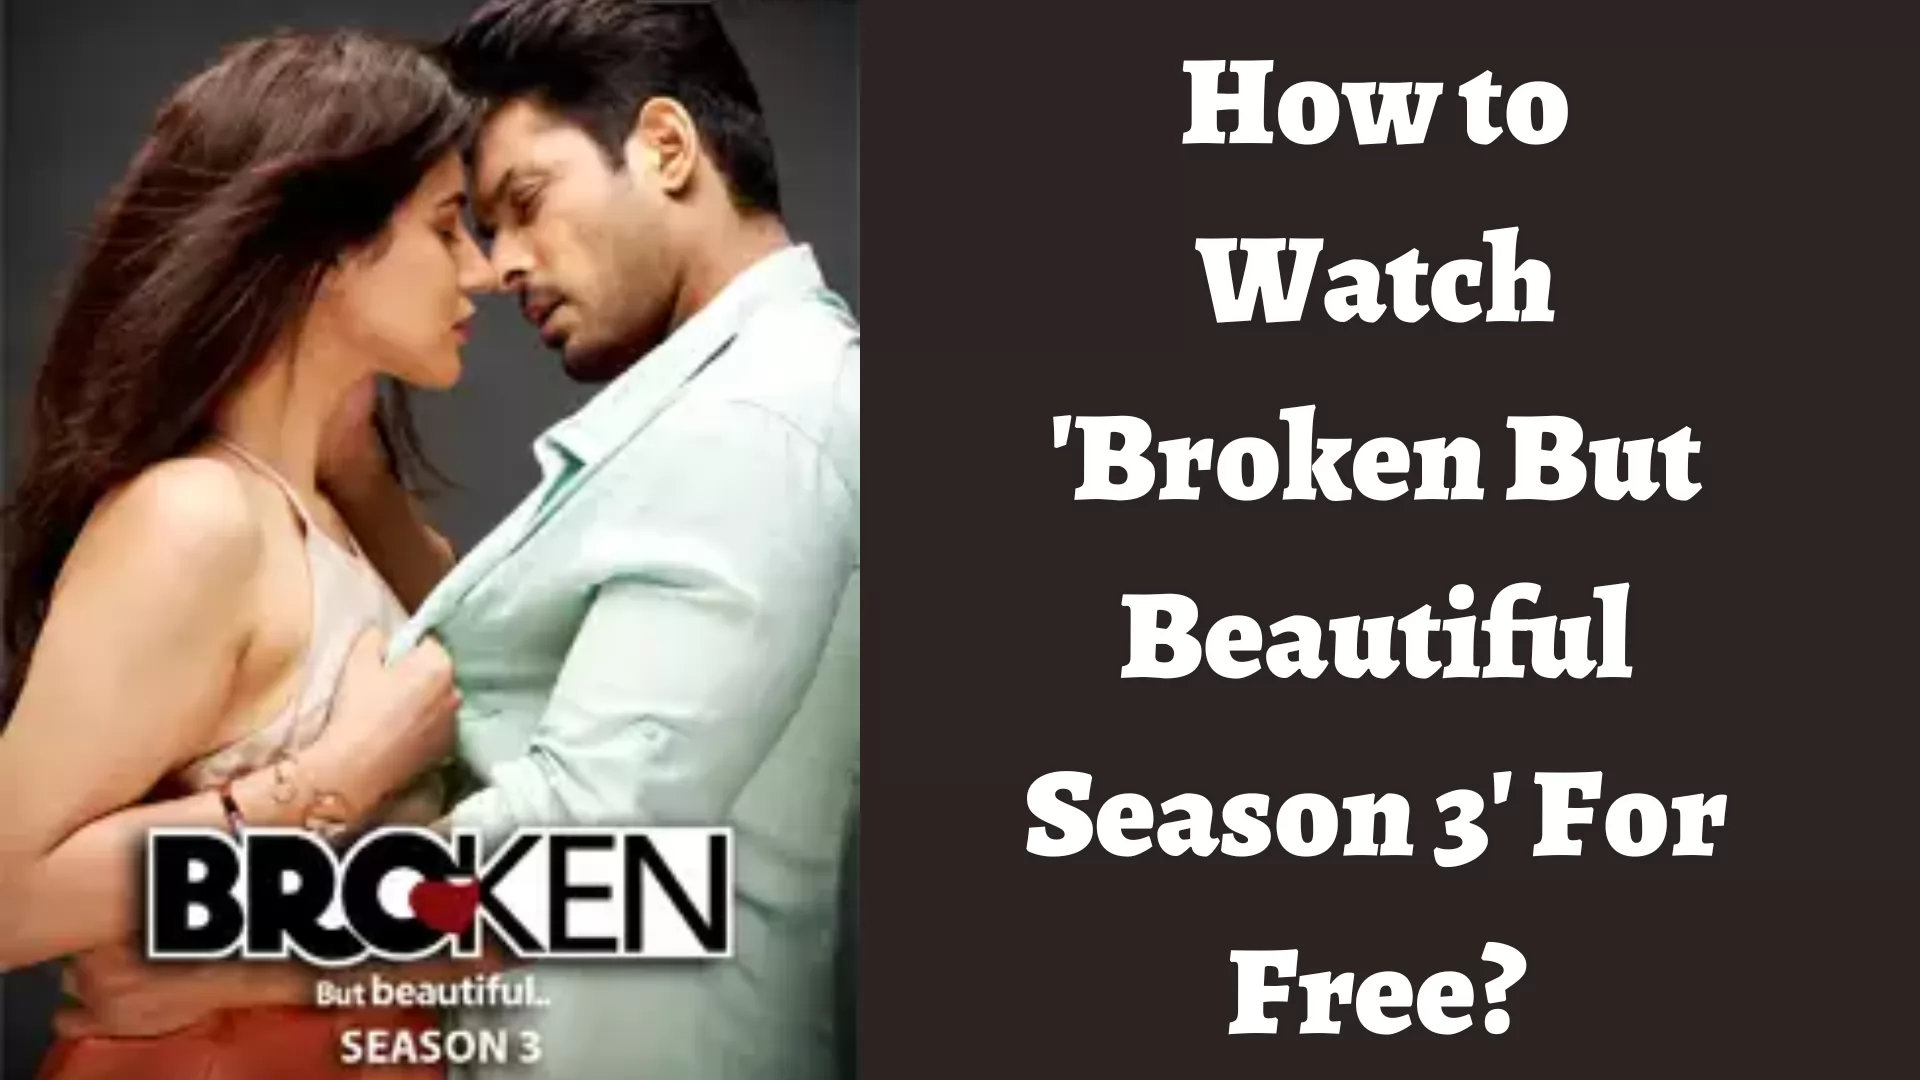 How to Watch Broken But Beautiful Season 3 for Free?